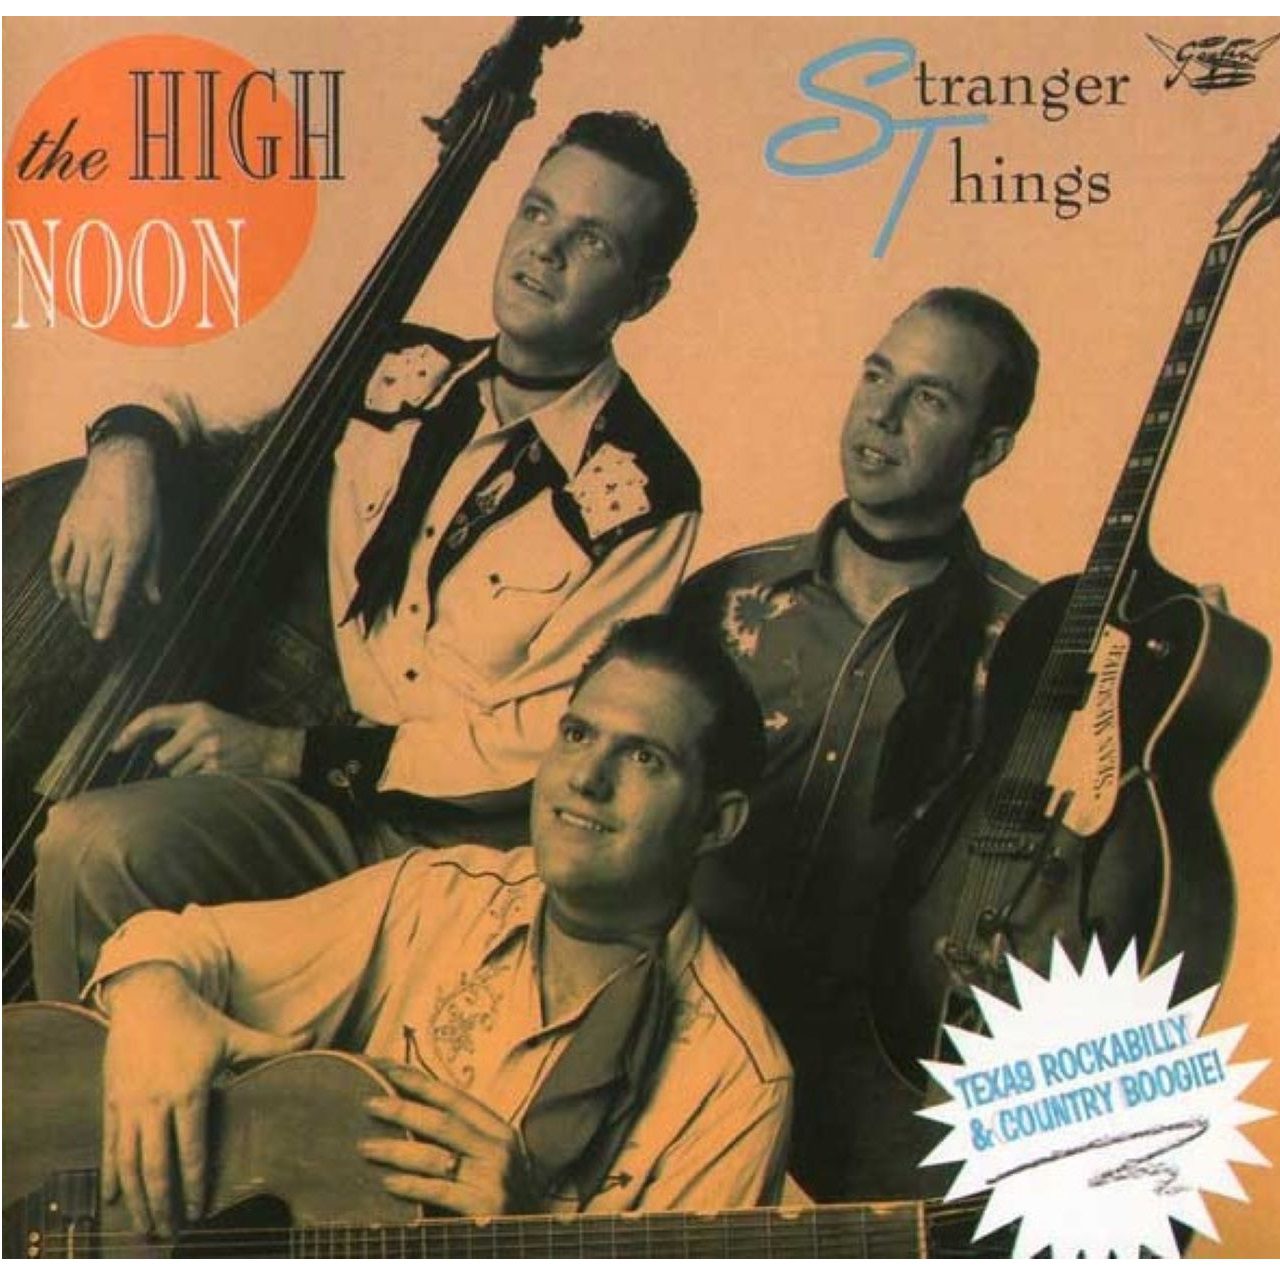 High Noon - Stranger Things cover album